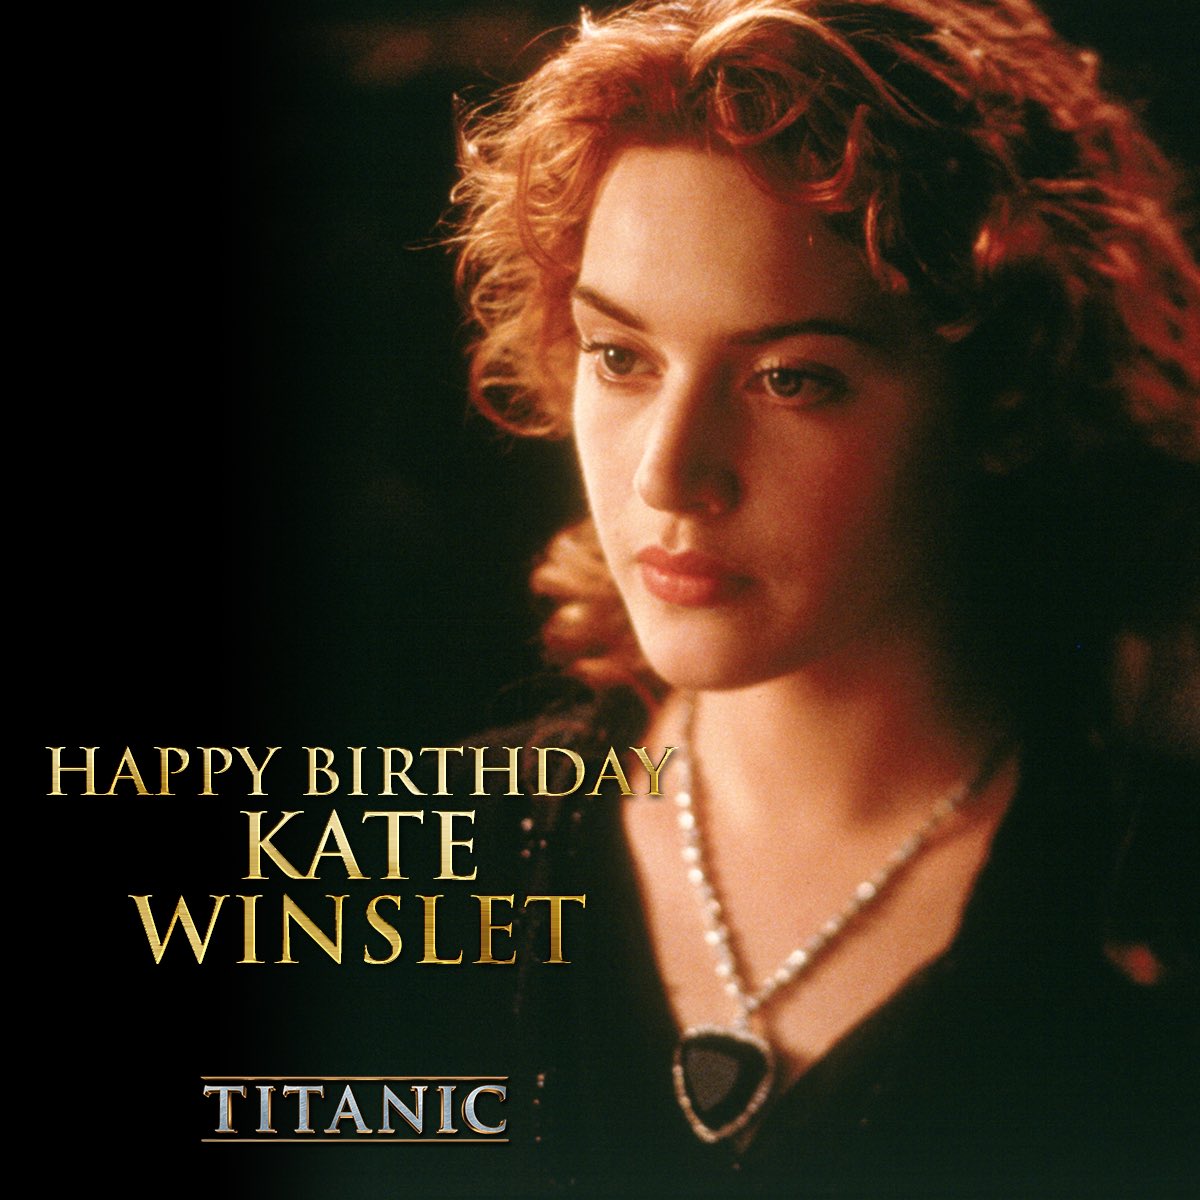 Betjene Stor mængde eftertænksom Titanic on Twitter: "Wishing a happy birthday to our Rose, Kate Winslet!  https://t.co/lruHmeP2Li" / Twitter